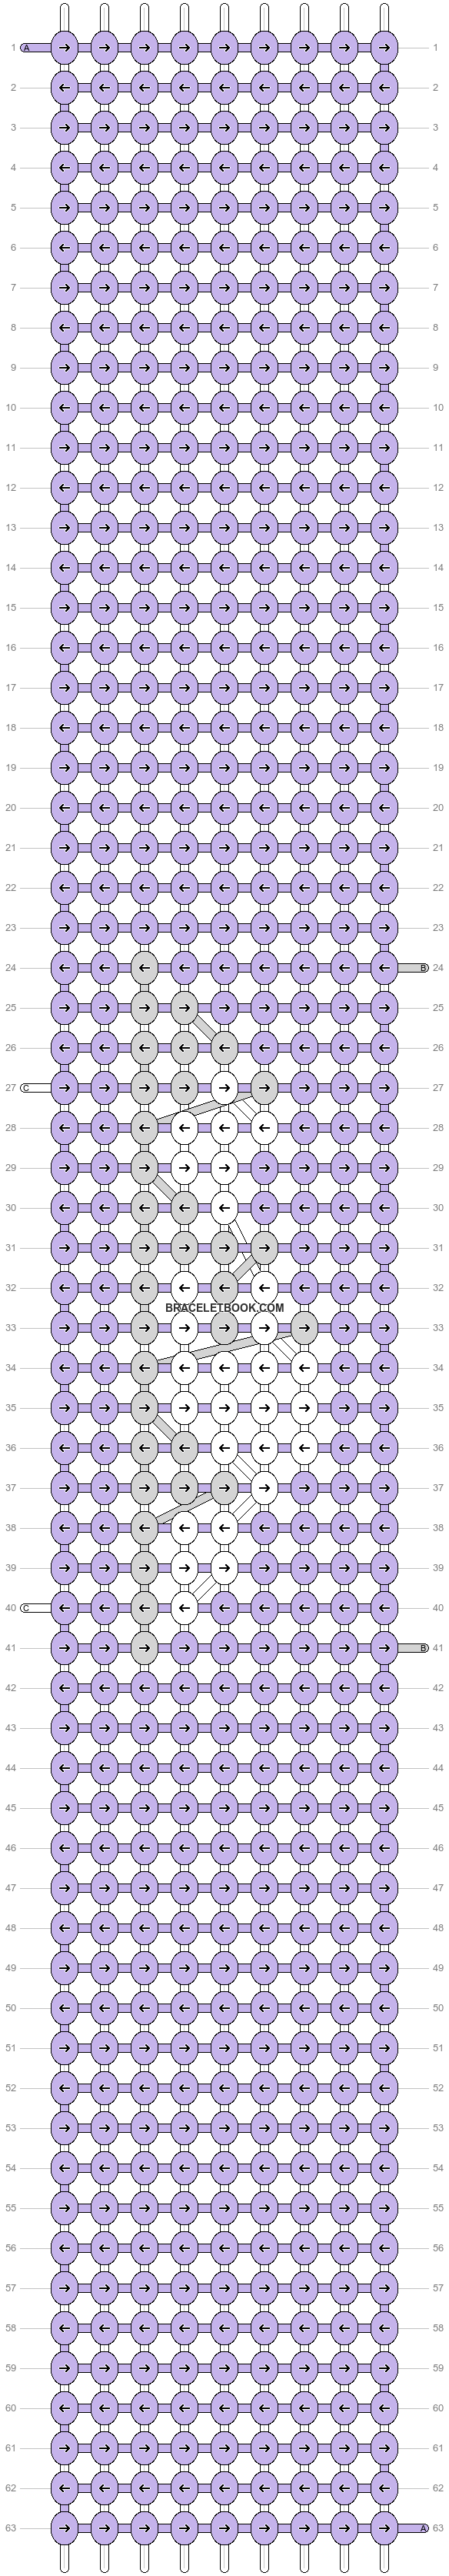 Alpha pattern #50477 variation #80529 pattern